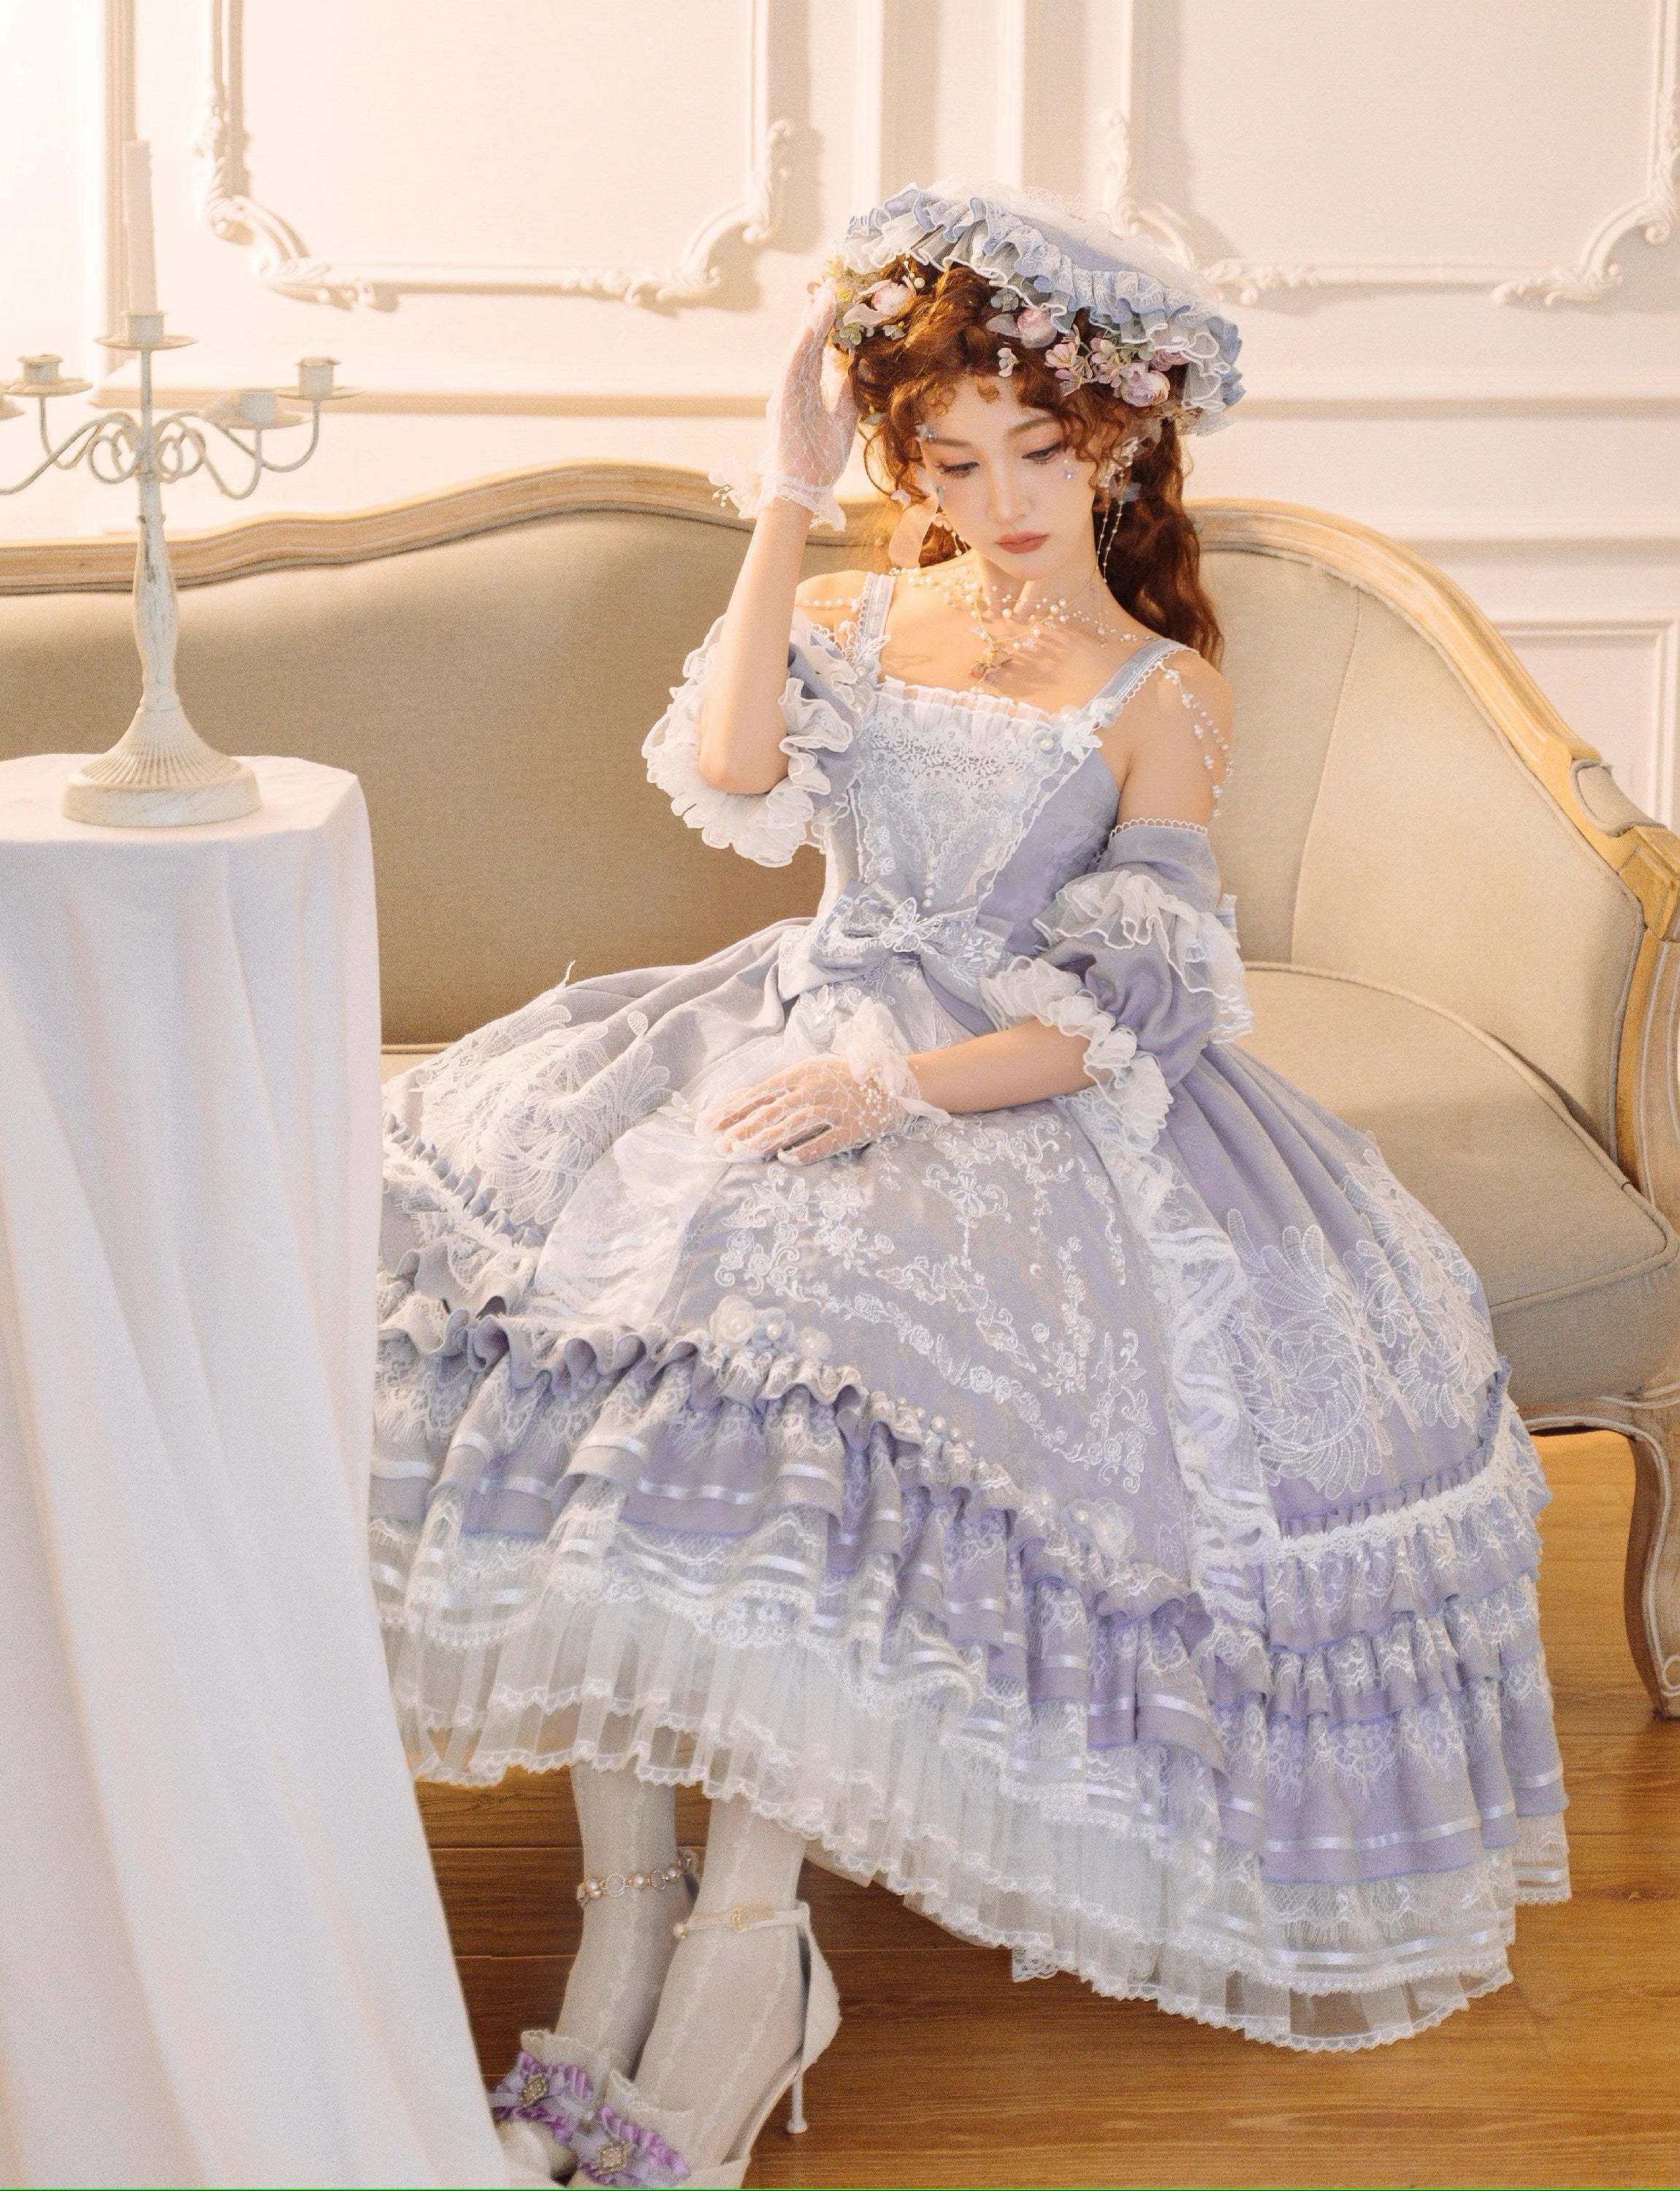 AngelR】プリンセスドレスすごく可愛いです - ドレス